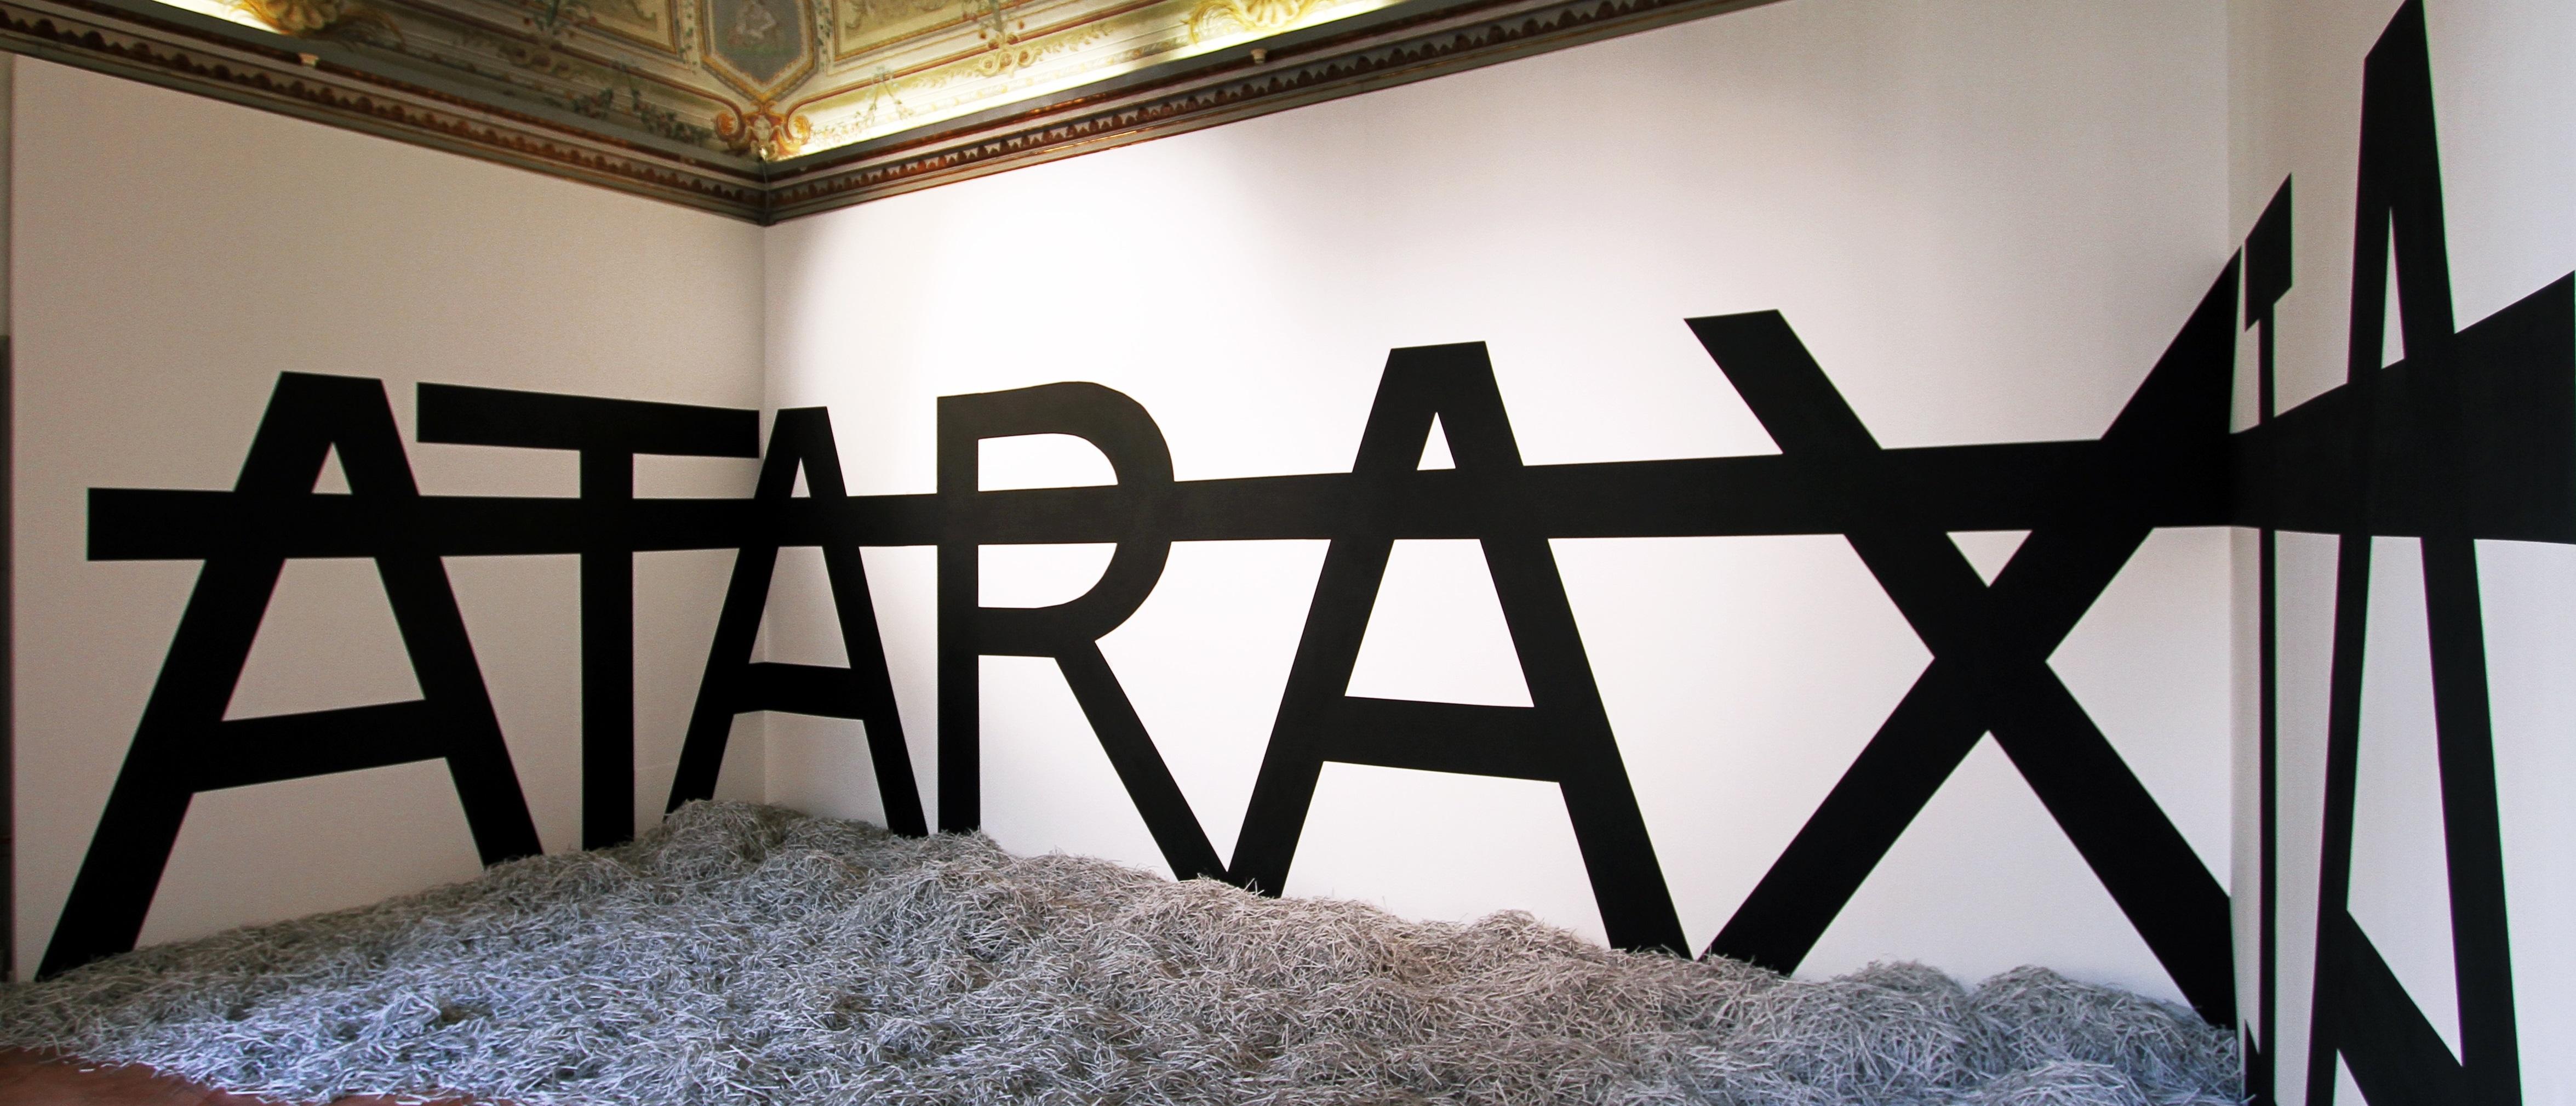 rero ataraxia exposition street art retrospective artistik rezo paris